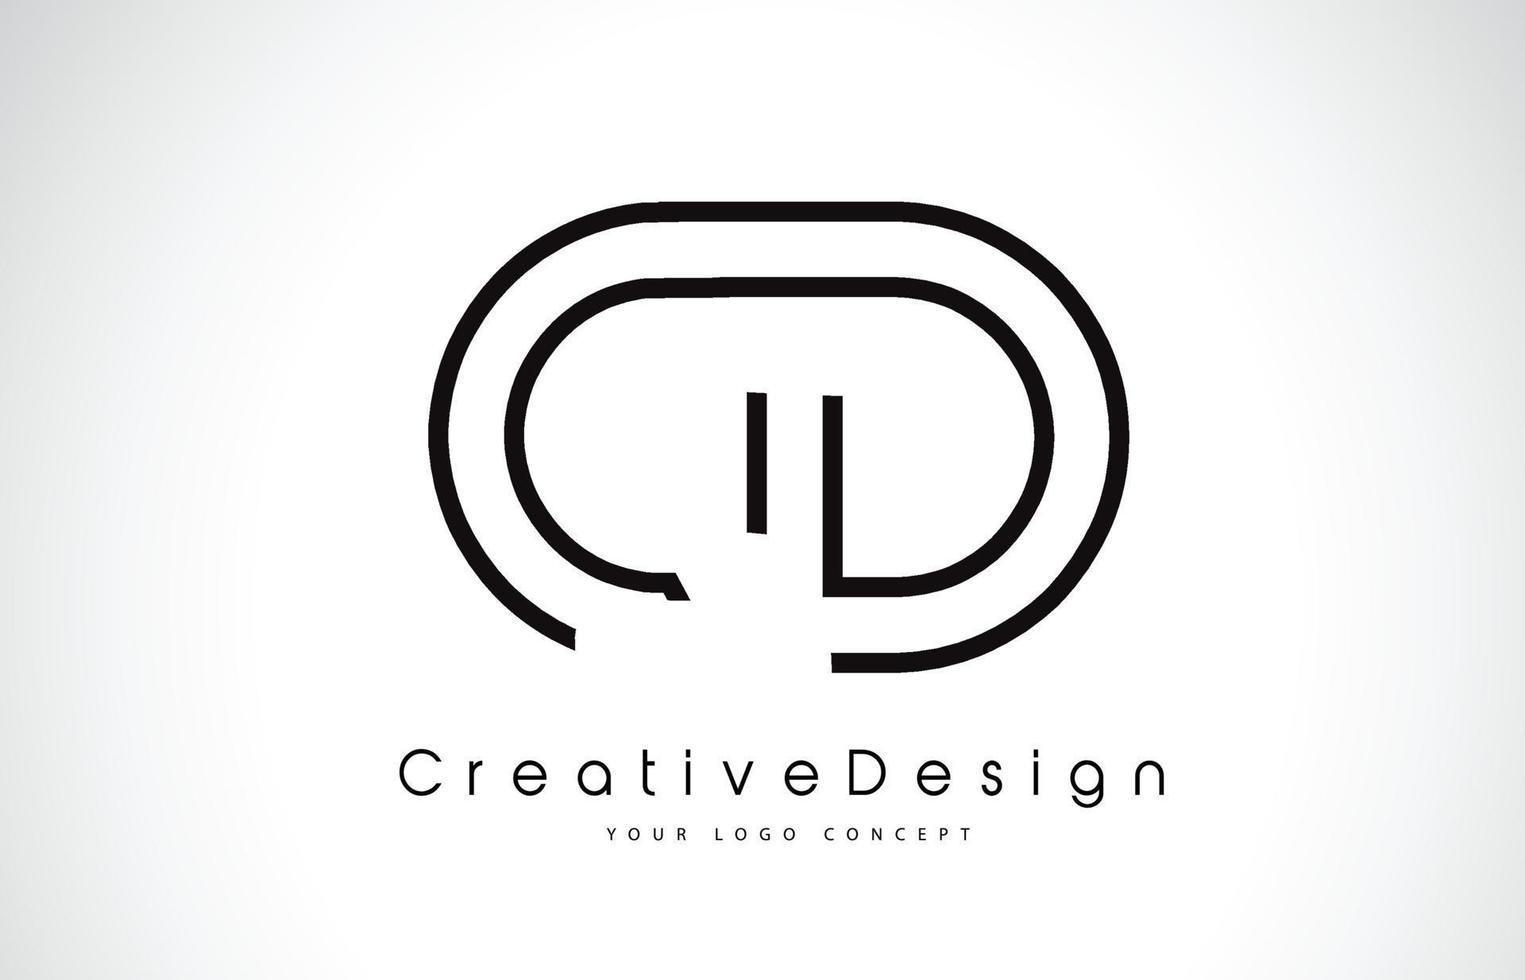 CD-CD-Brief-Logo-Design in schwarzen Farben. vektor